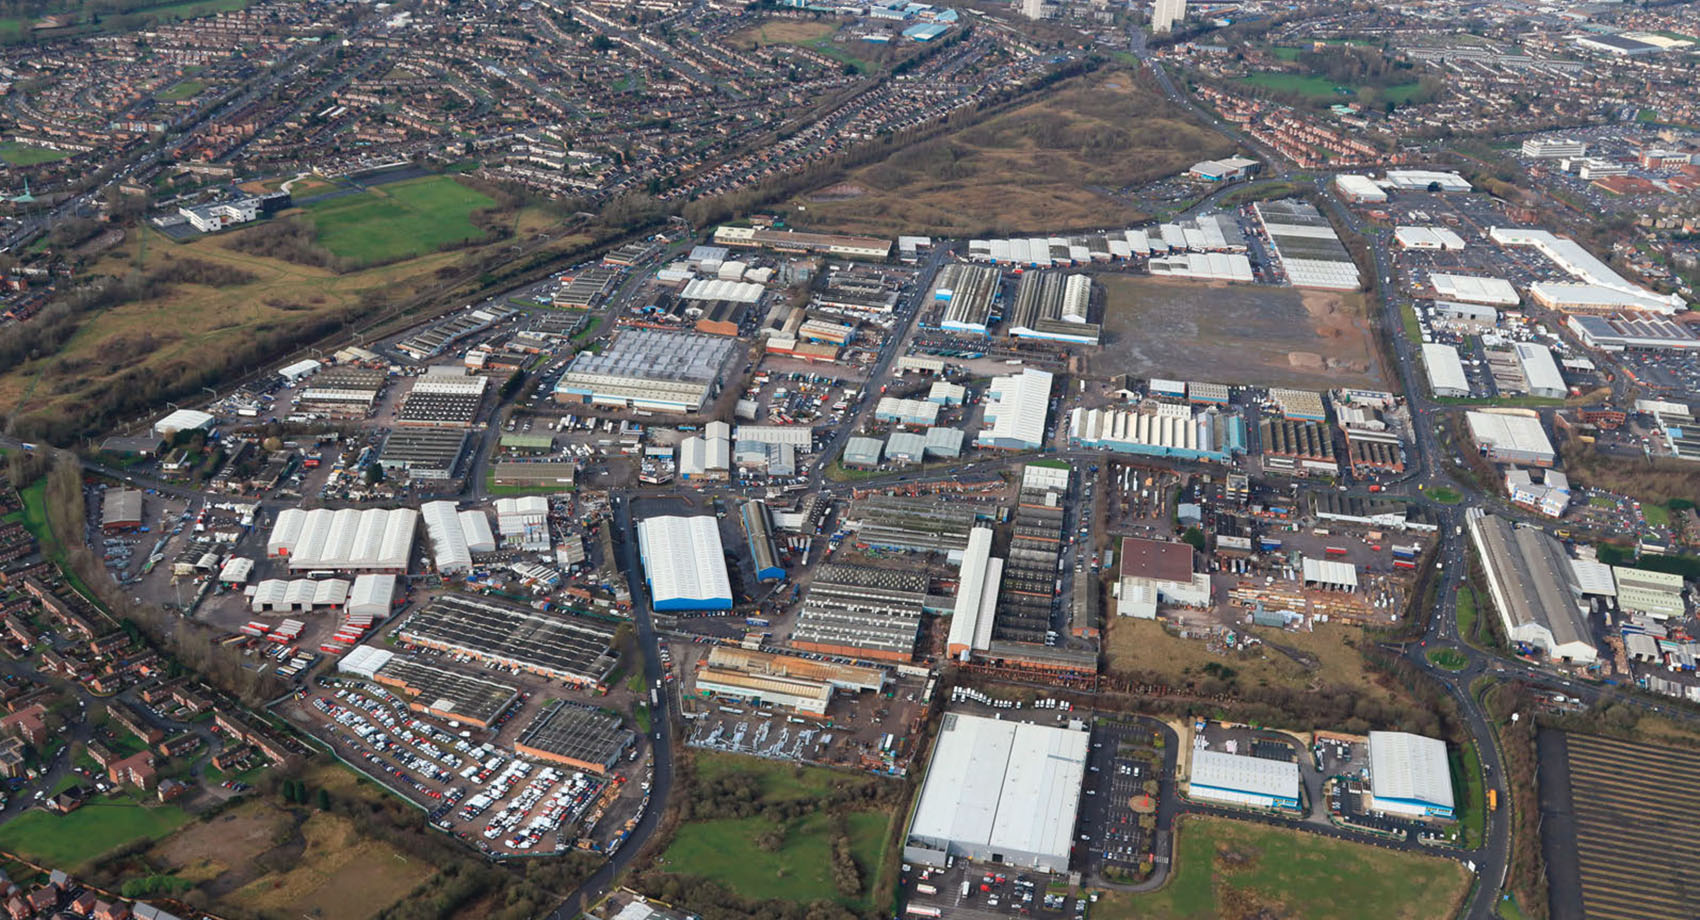 Watery Lane Industrial Estate Wolverhampton